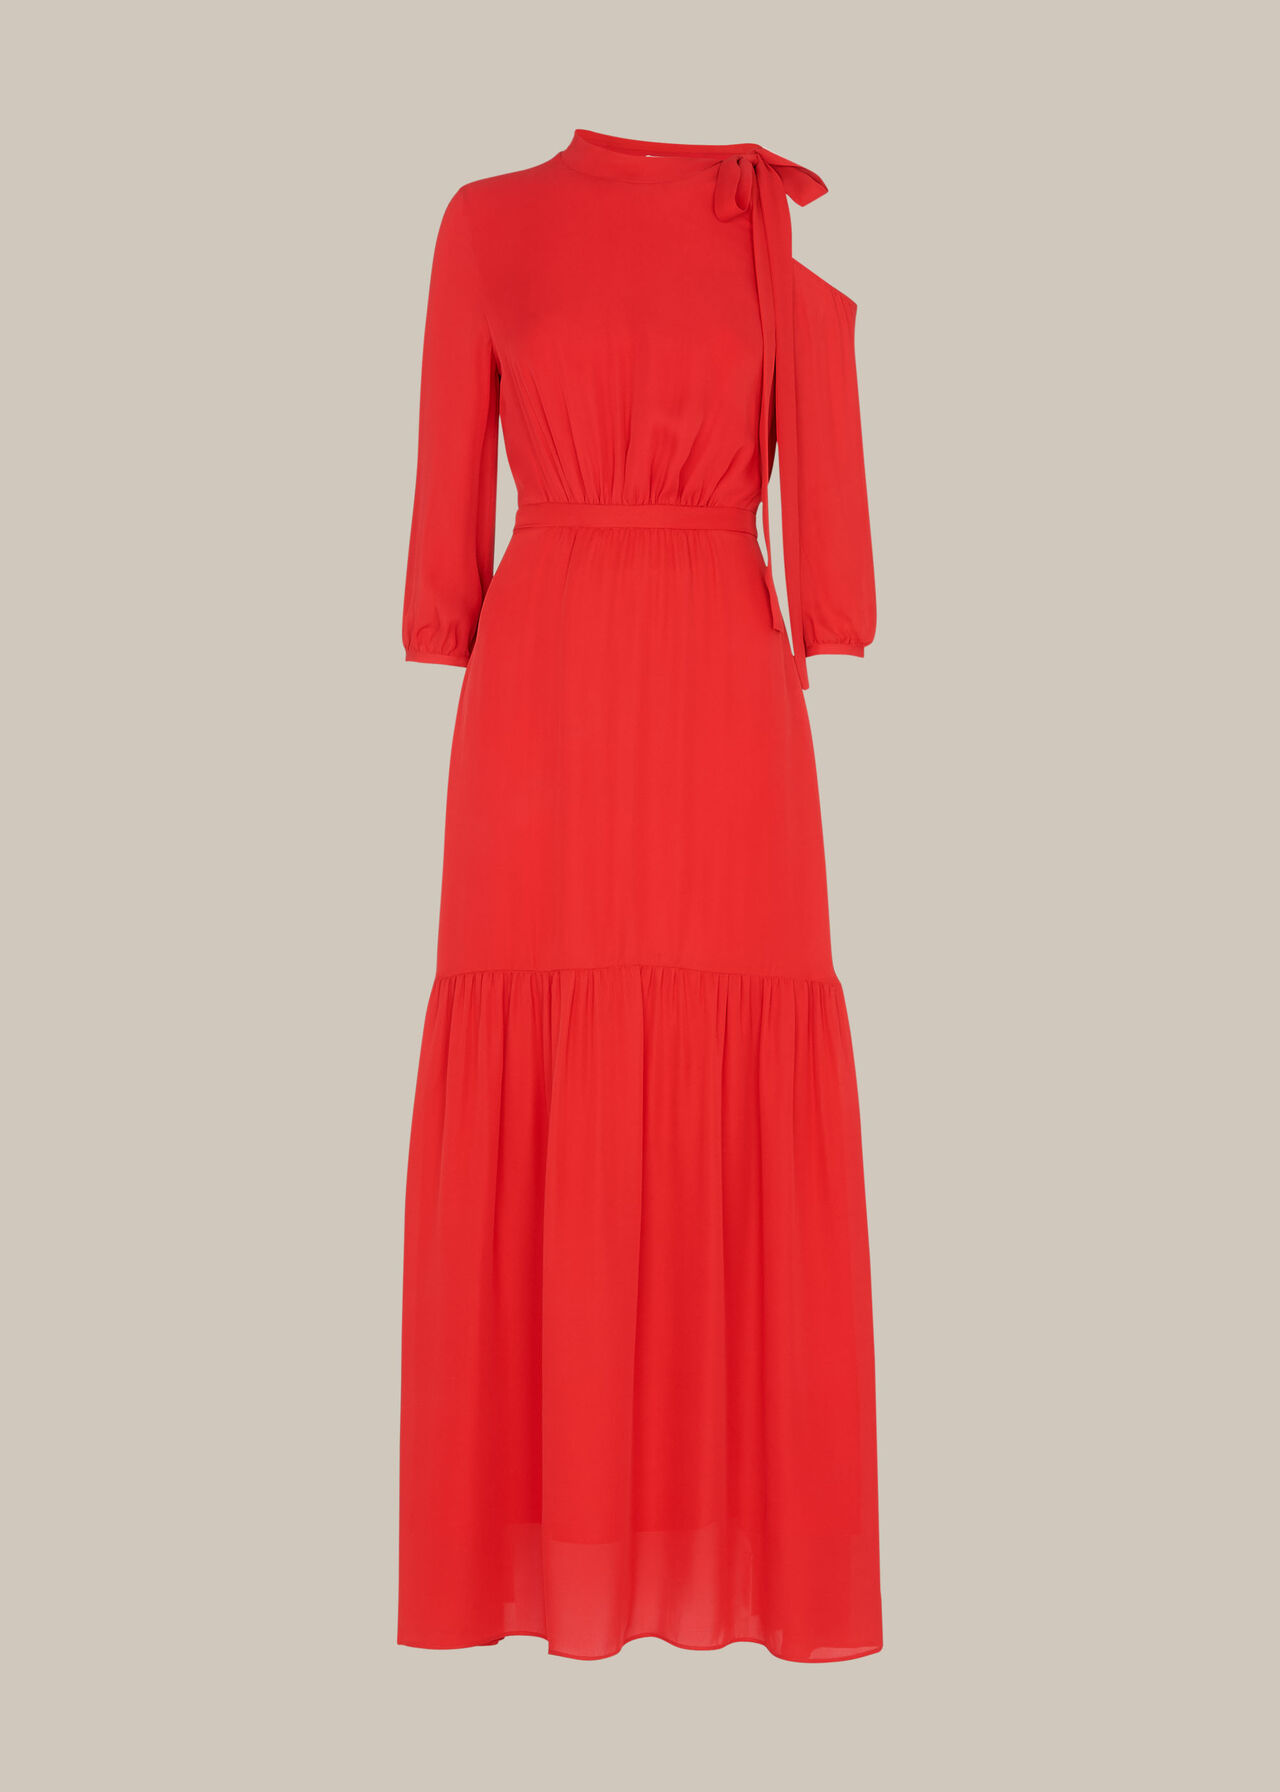 Red One Shoulder Silk Dress | WHISTLES